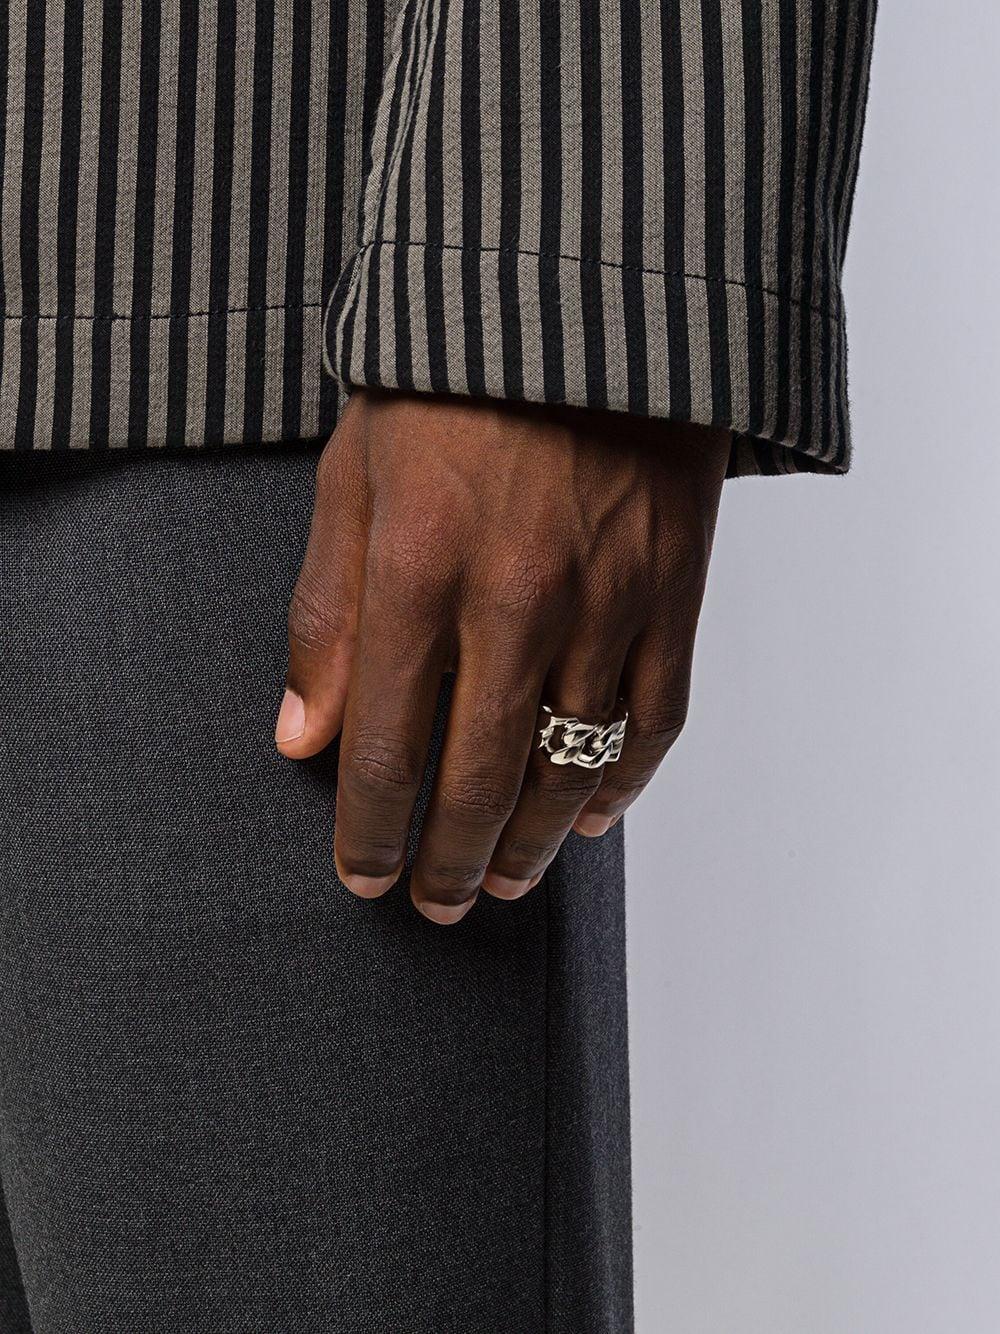 Alexander McQueen Identity Ring in Metallic for Men - Lyst